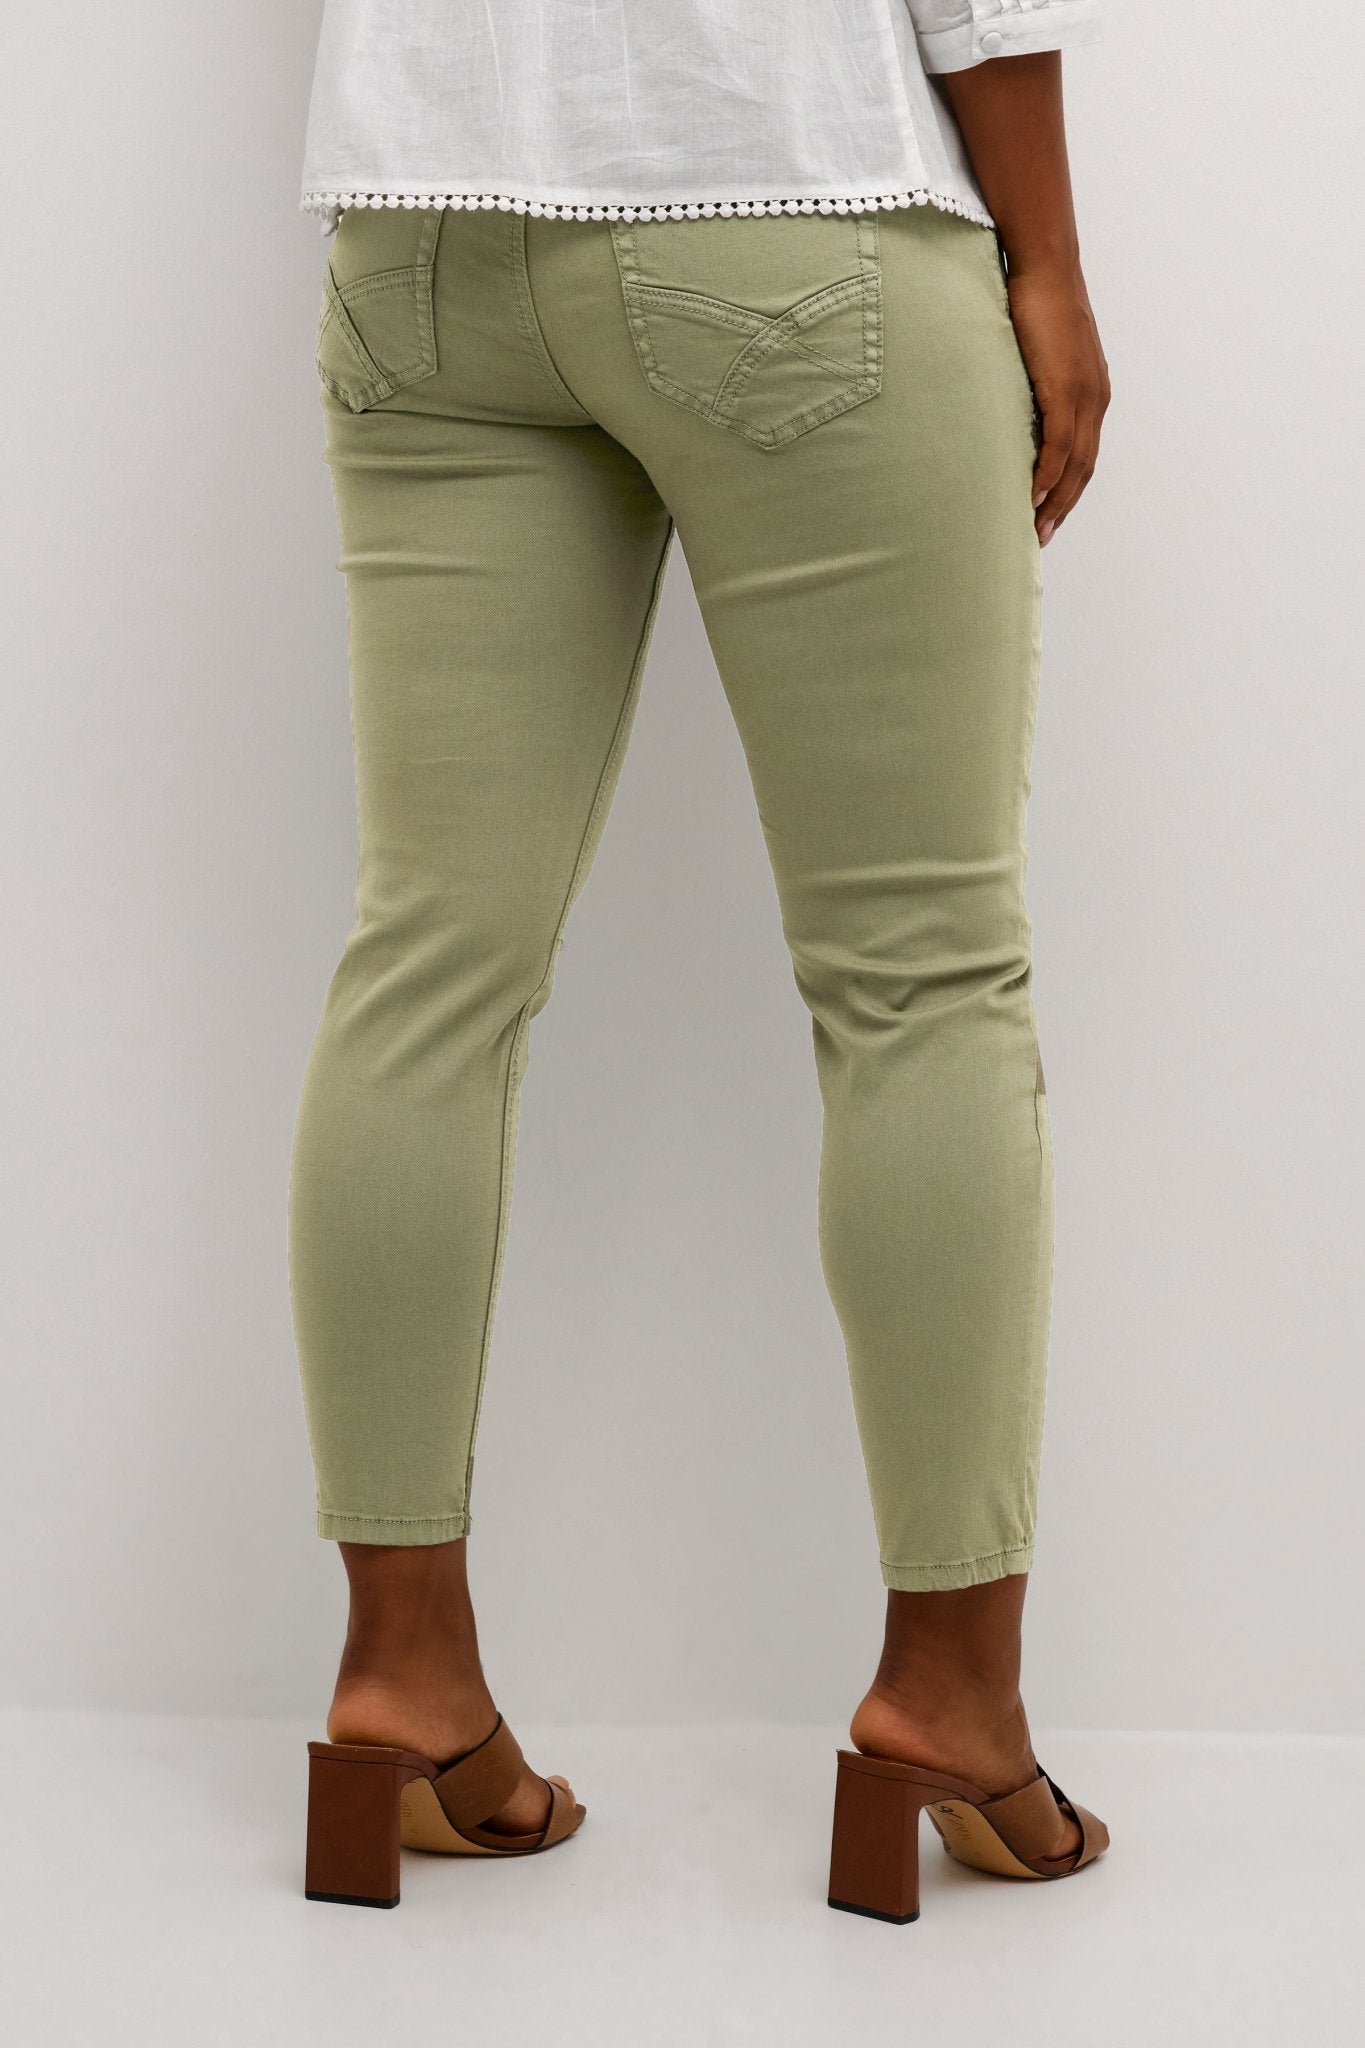 Paula Jeans by Cream - Lichen green - Blue Sky Fashions & Lingerie